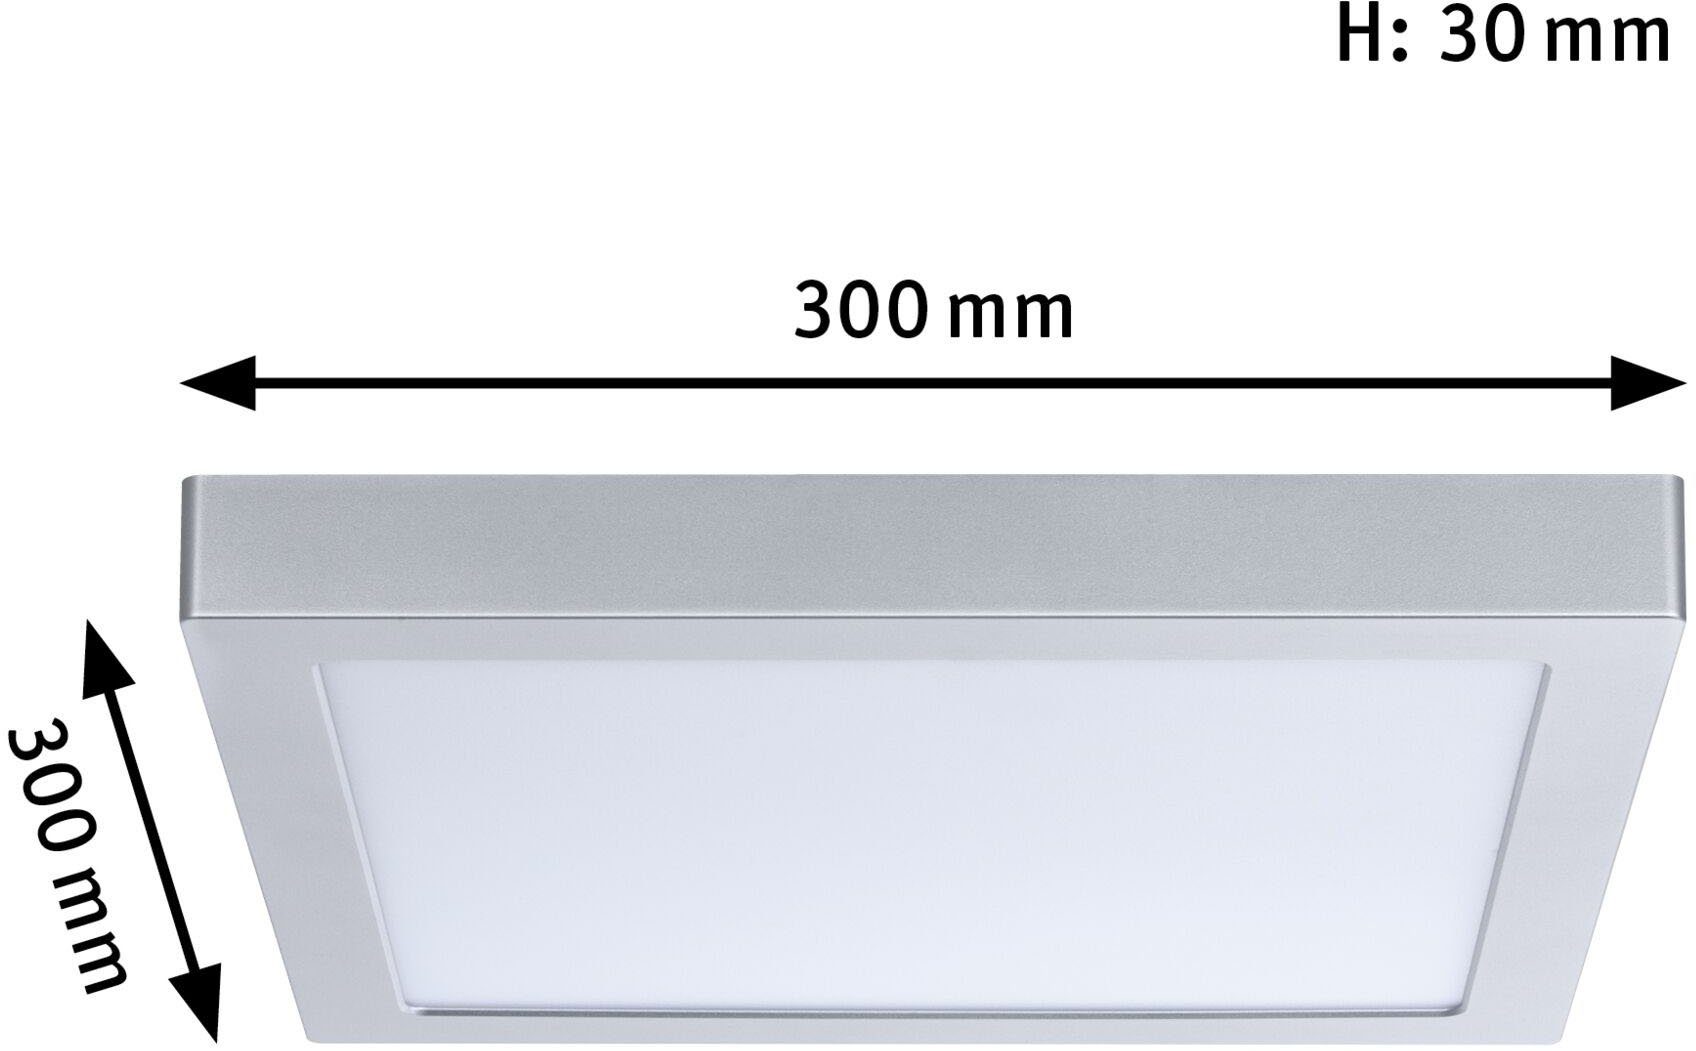 Warmweiß, fest integriert, LED-Modul, Paulmann Deckenleuchte LED LED LED Deckenlampe Abia,